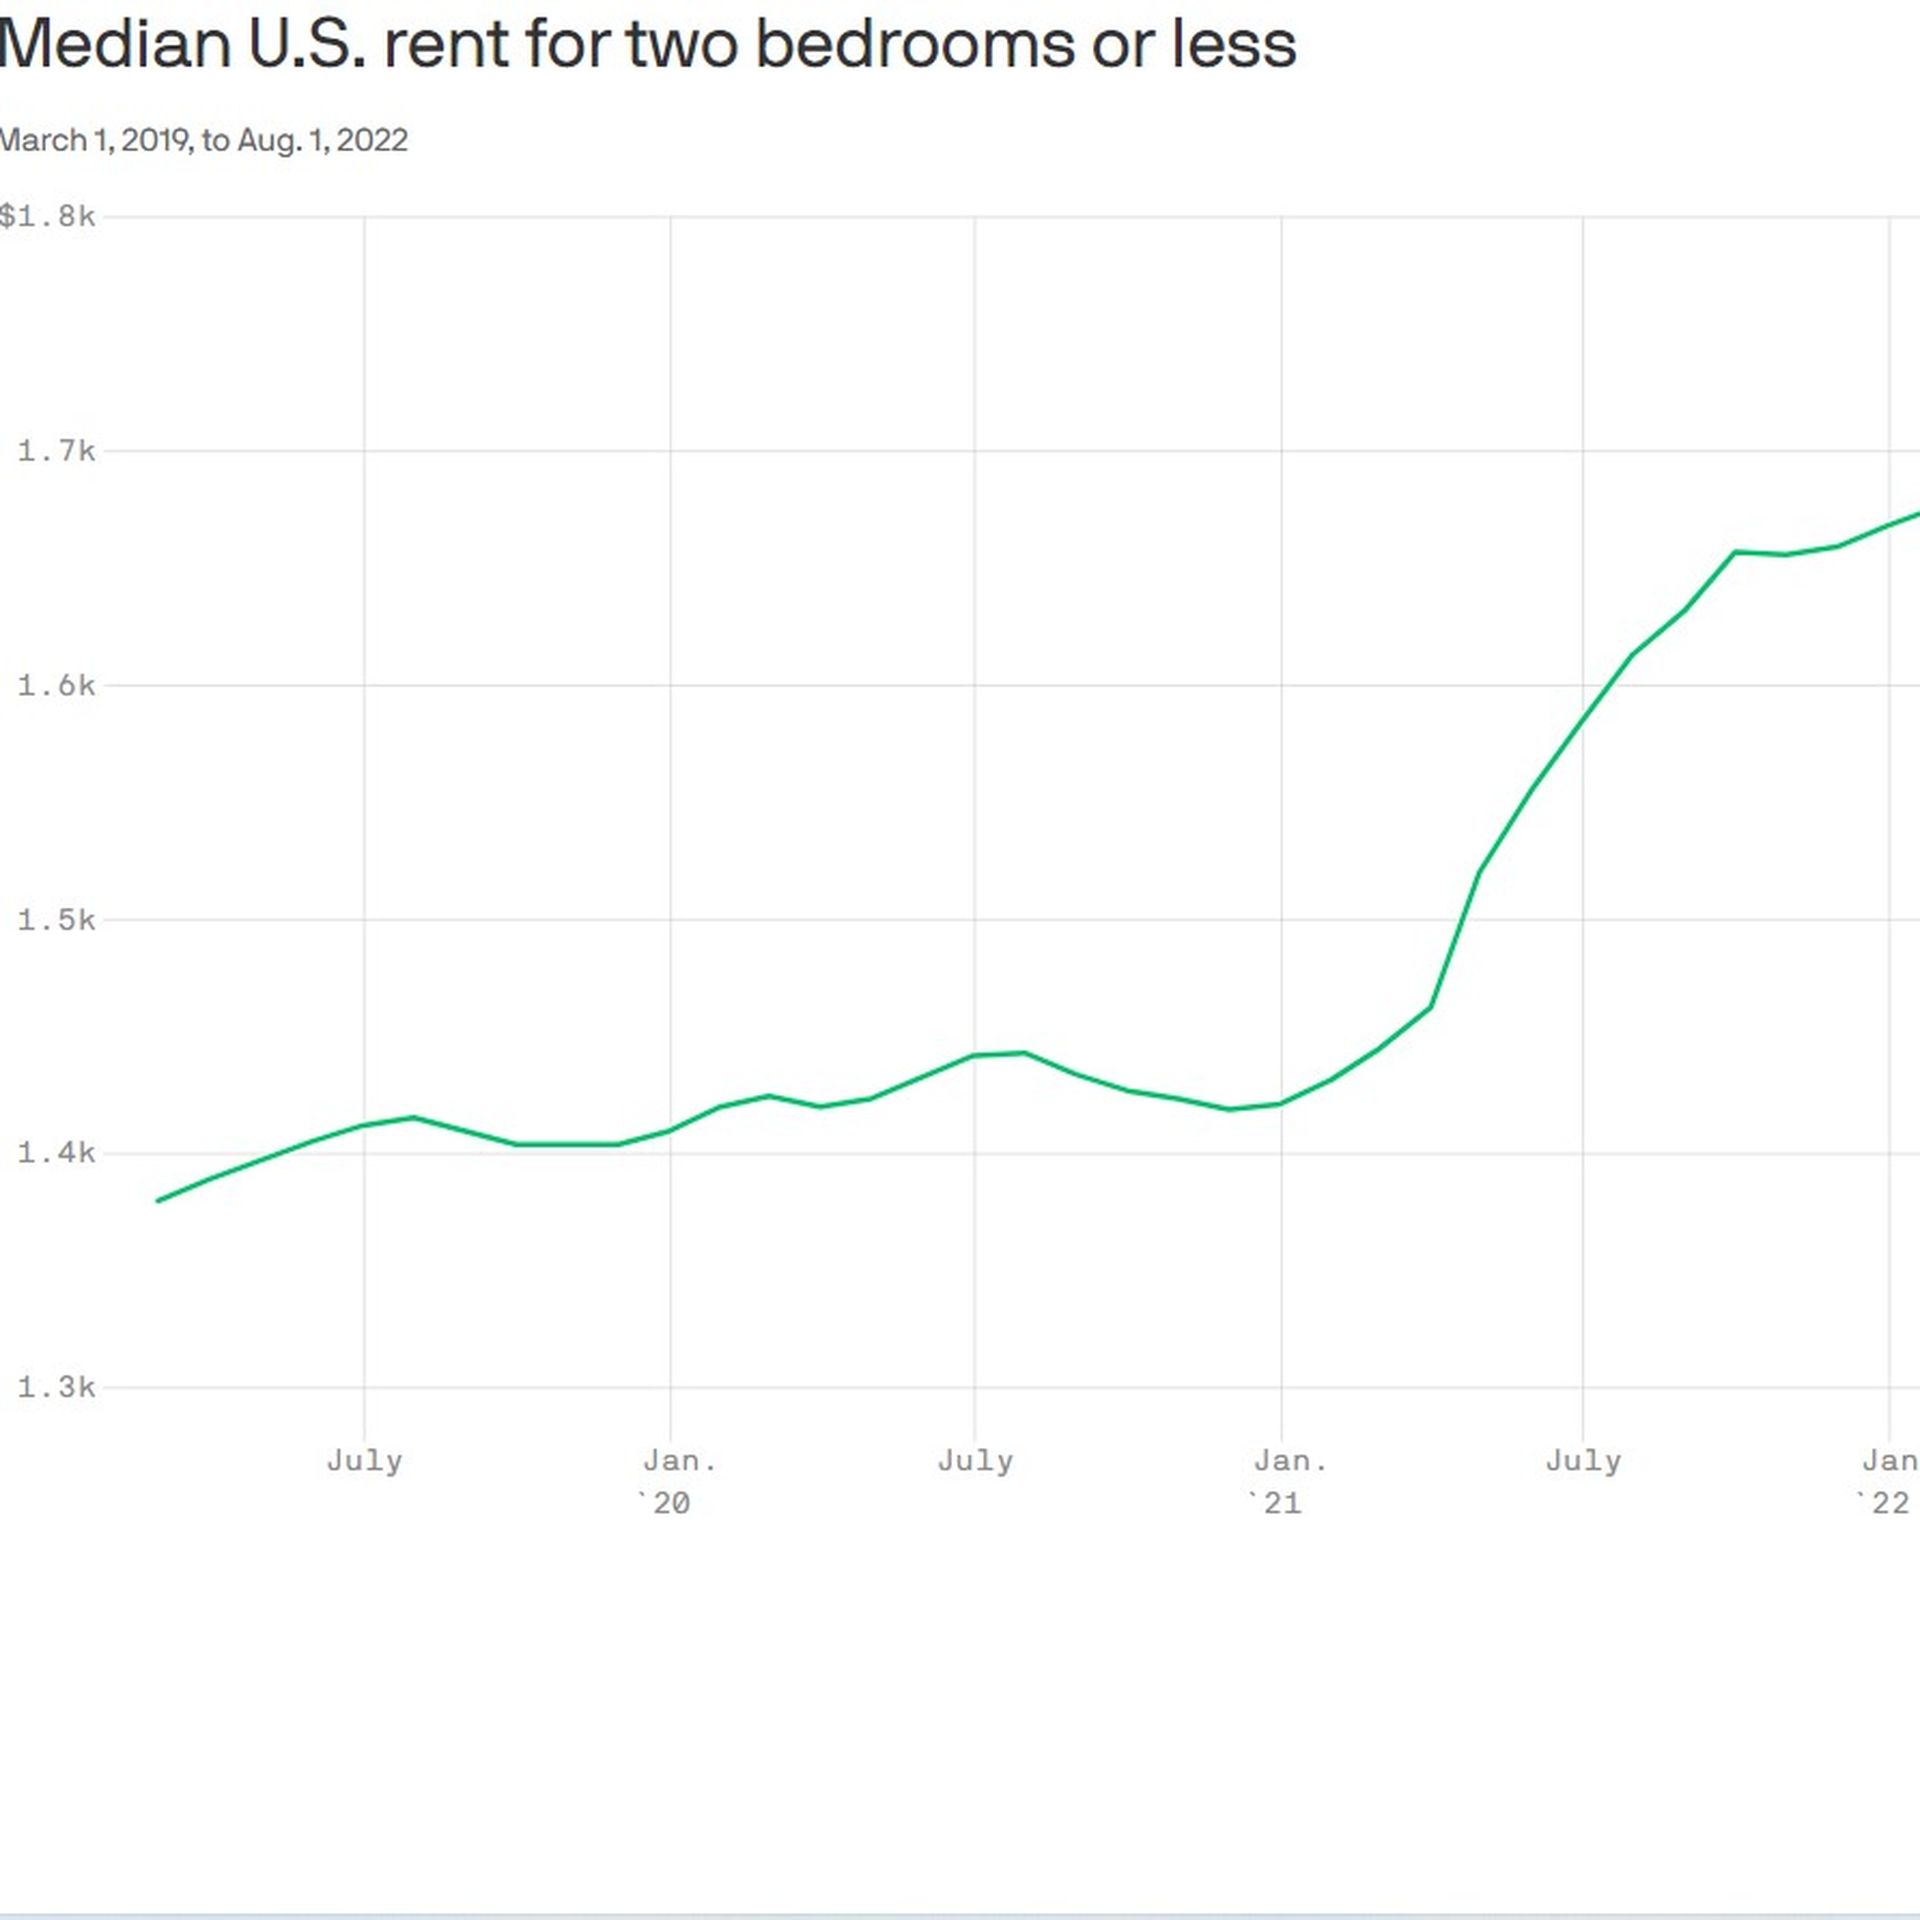 Chart showing median U.S. rent